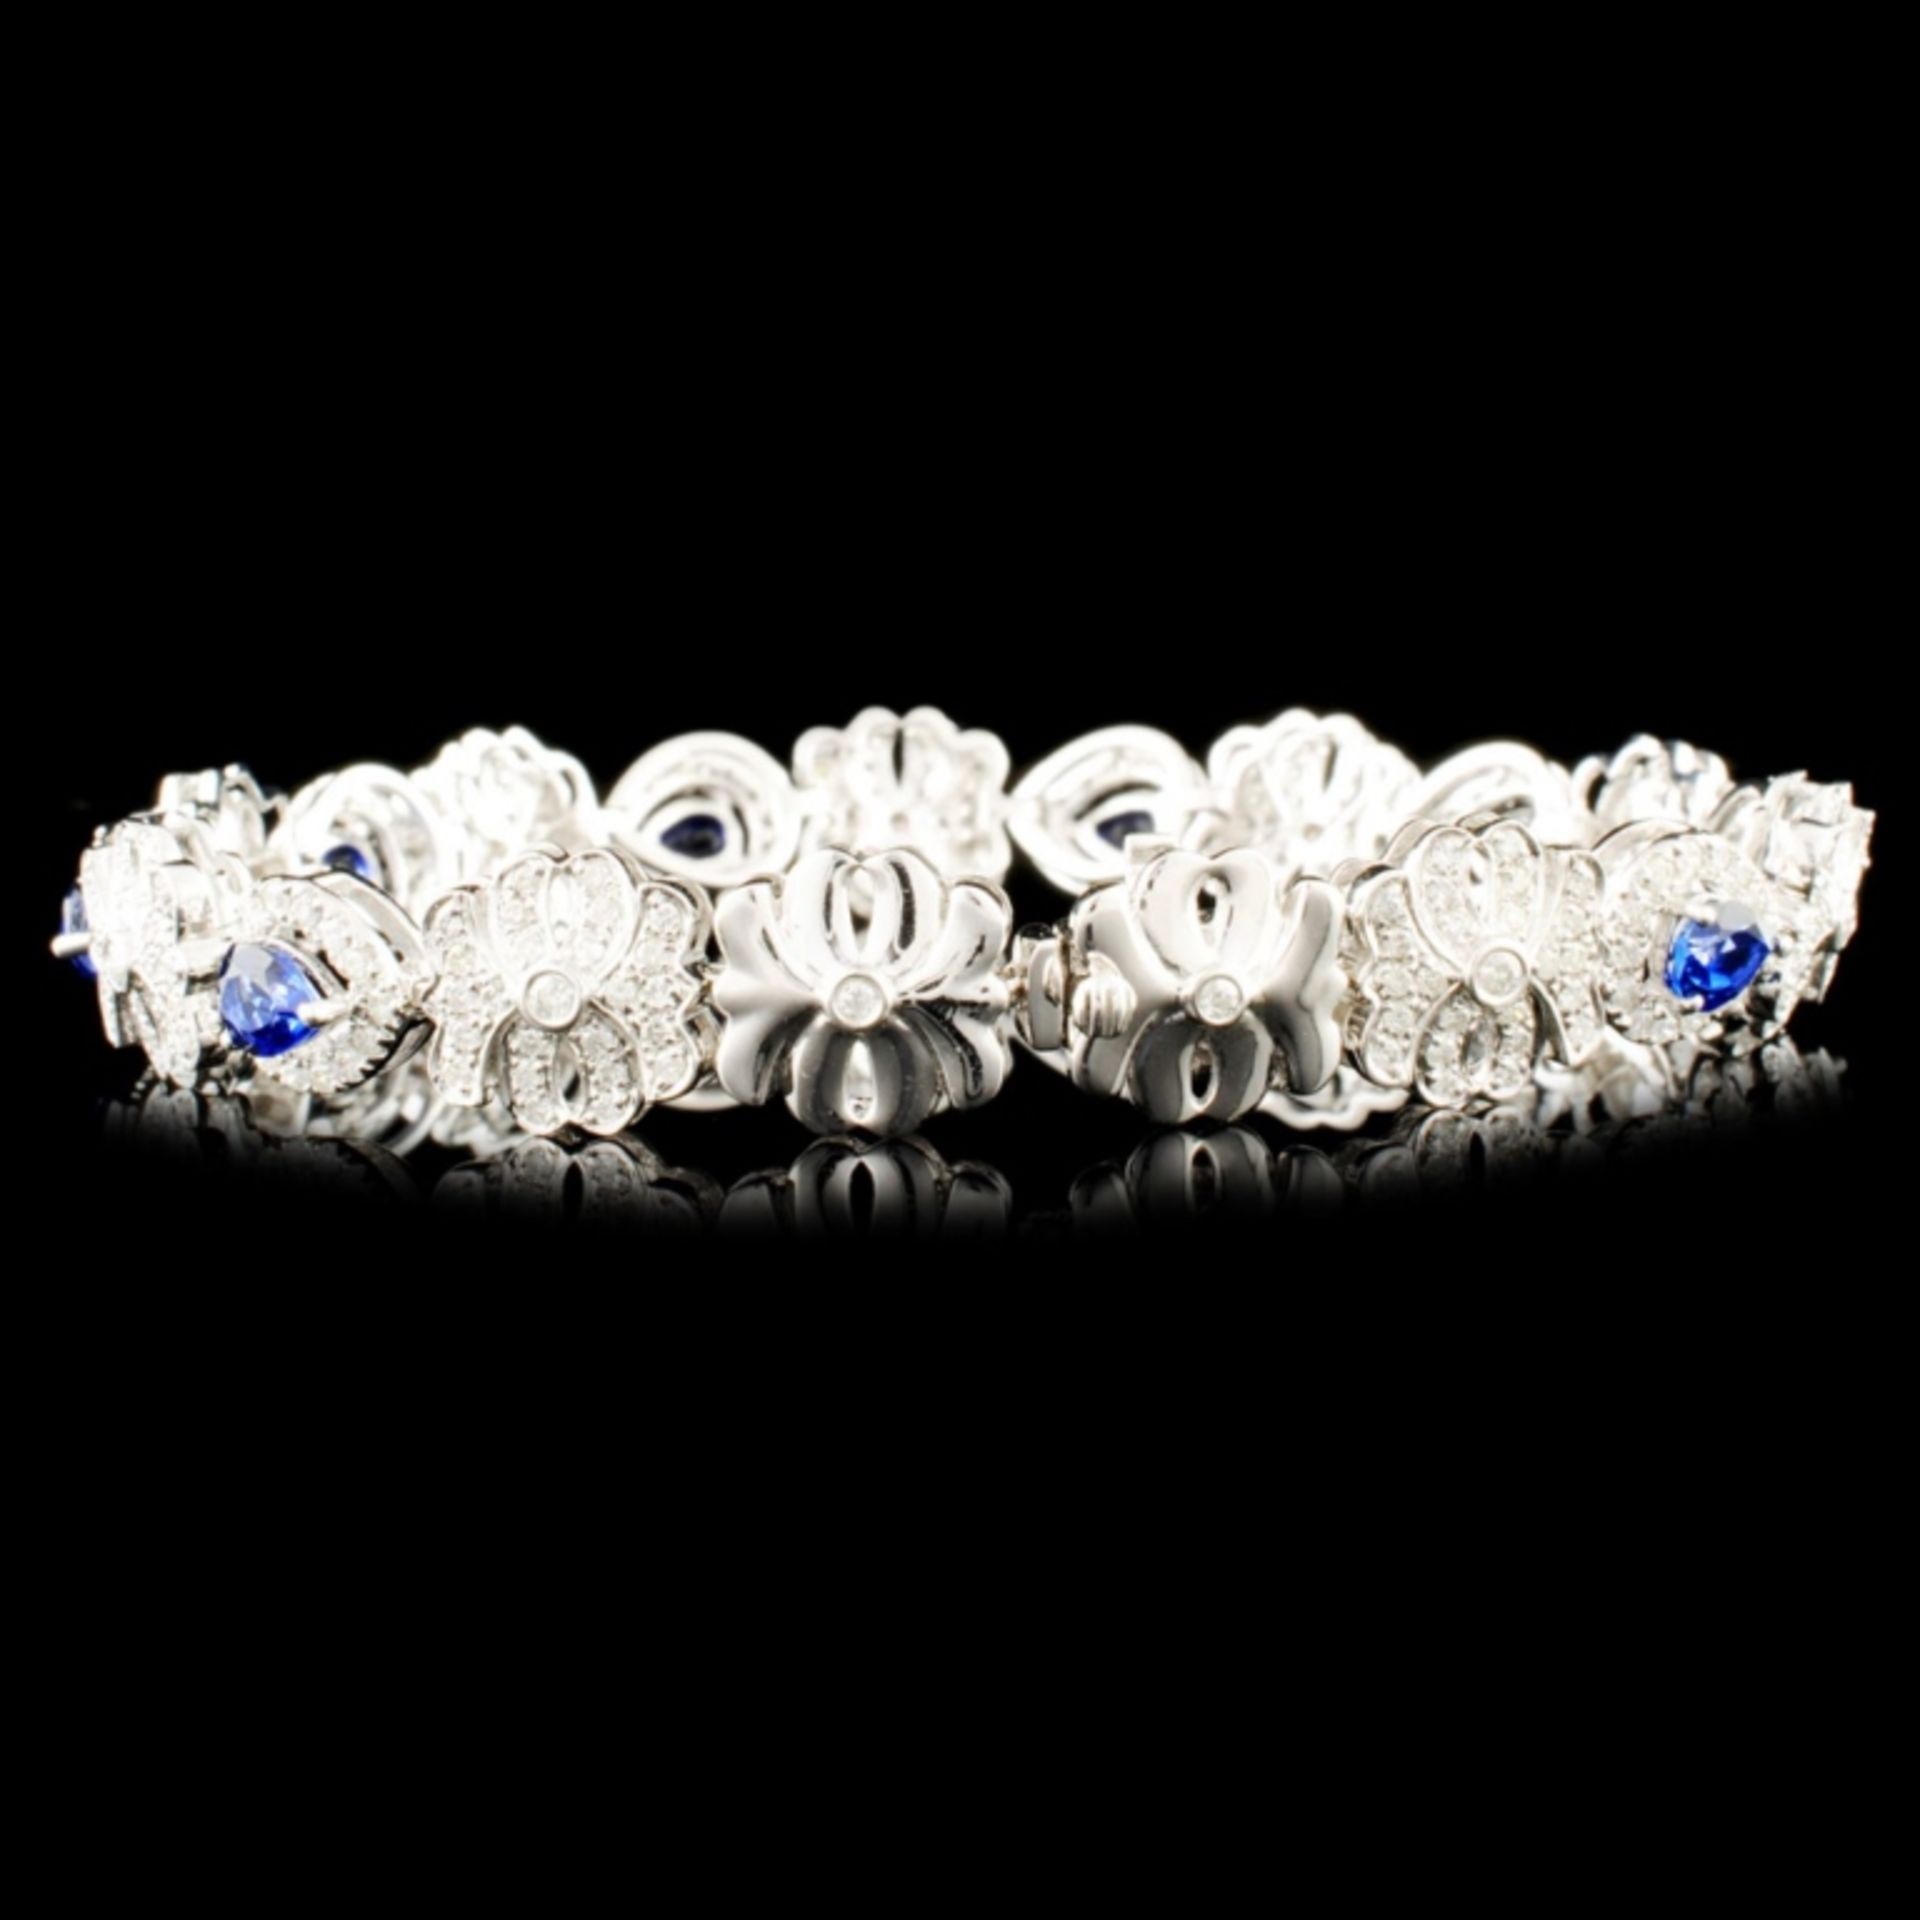 14K Gold 3.24ct Sapphire & 2.11ctw Diamond Bracele - Image 2 of 4